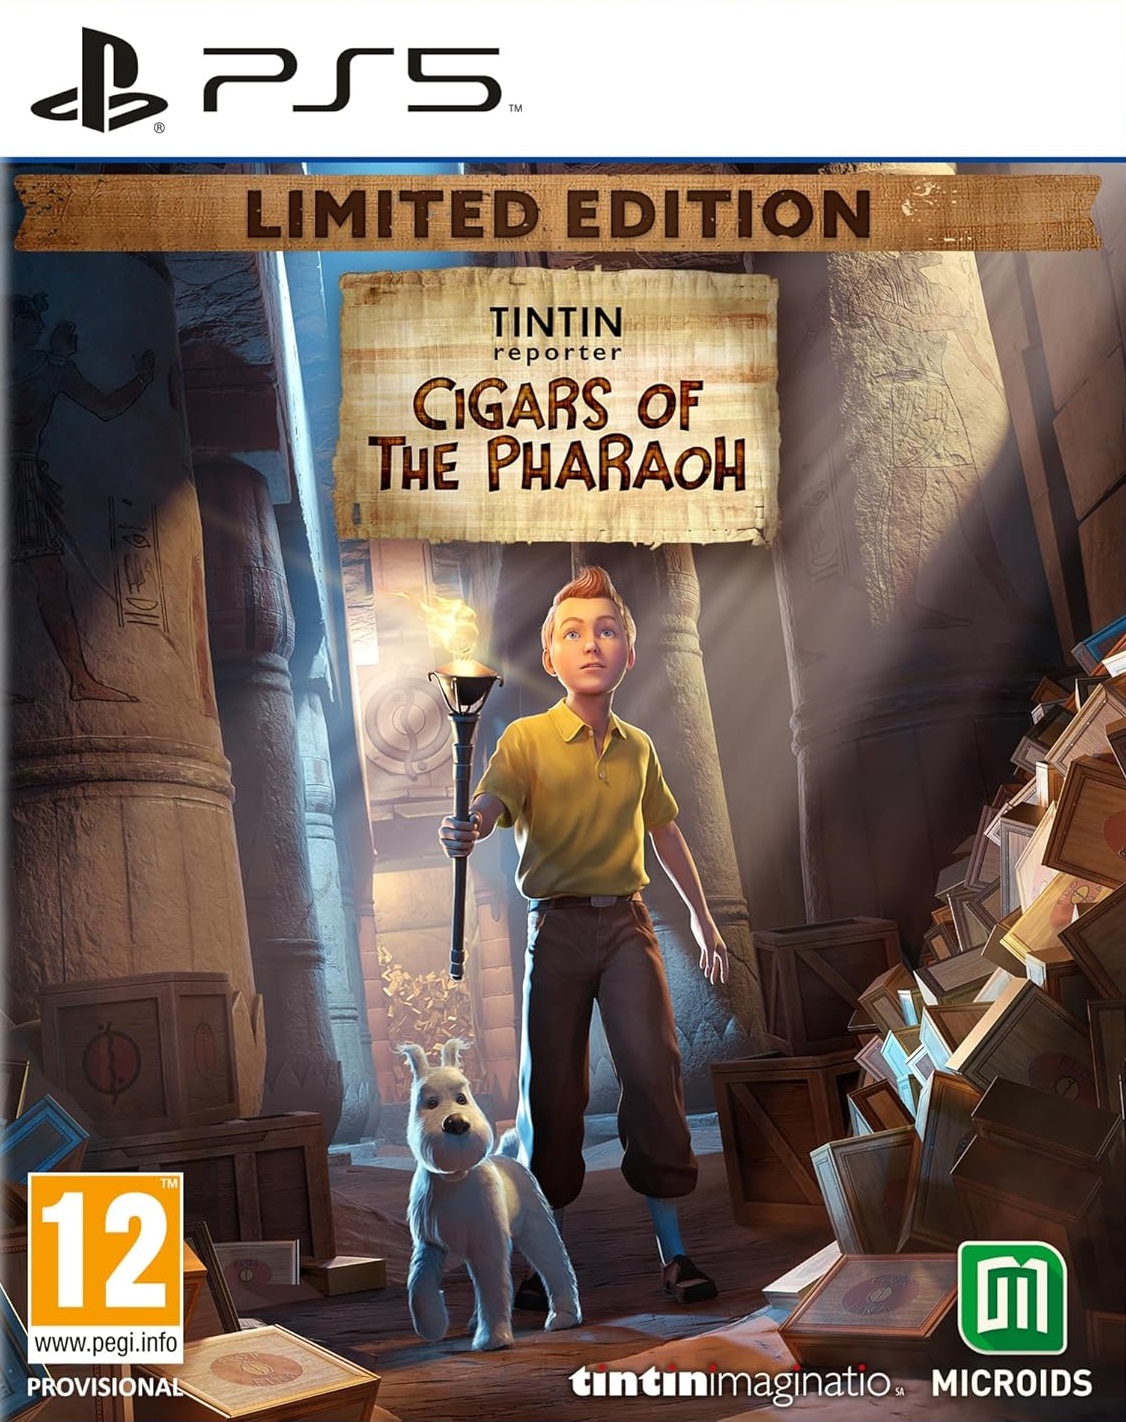 Игра Tintin Reporter Cigars of the Pharaoh Limited Edition (PS5, русские субтитры)